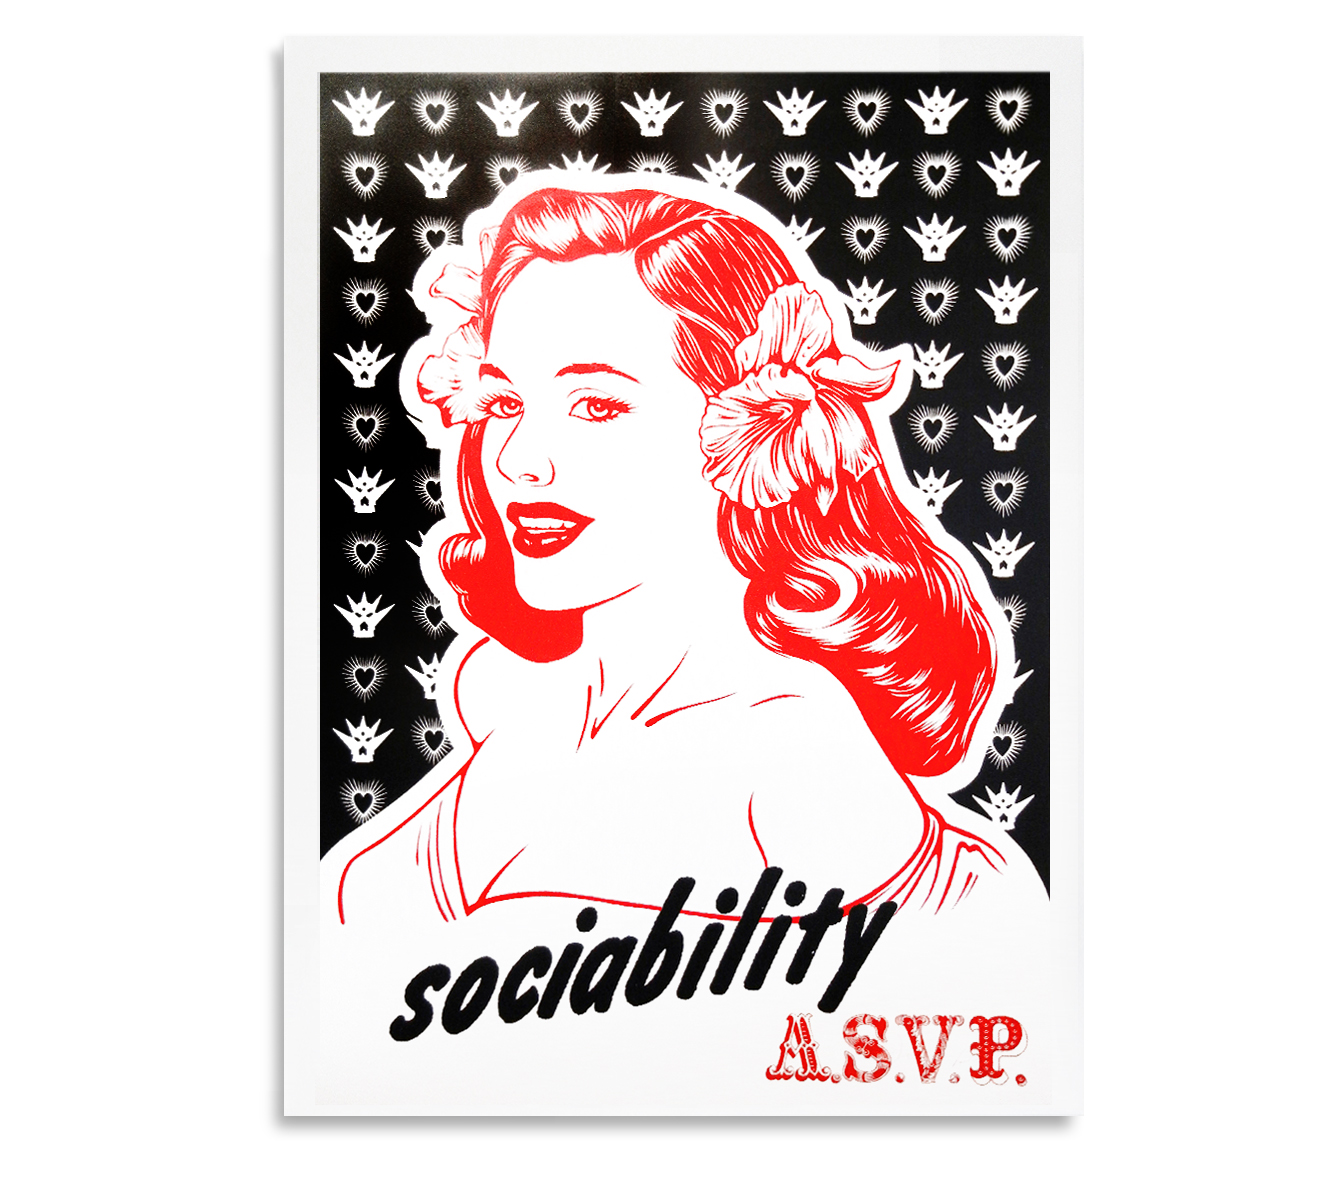 asvp_blackbook_sociability_3.2.jpg